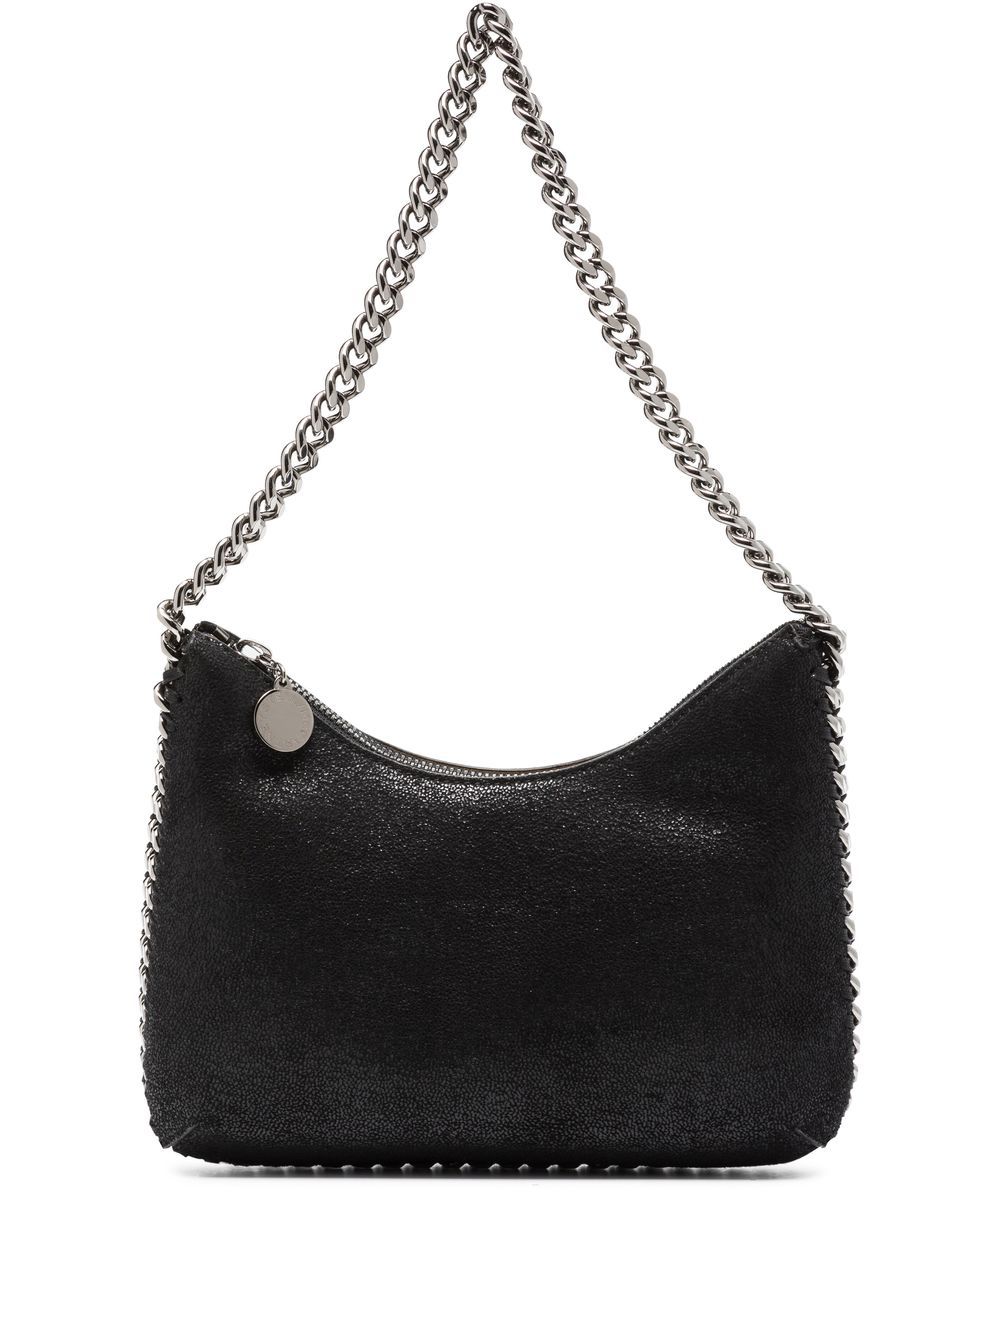 Stella McCartney mini Falabella zip shoulder bag - Black